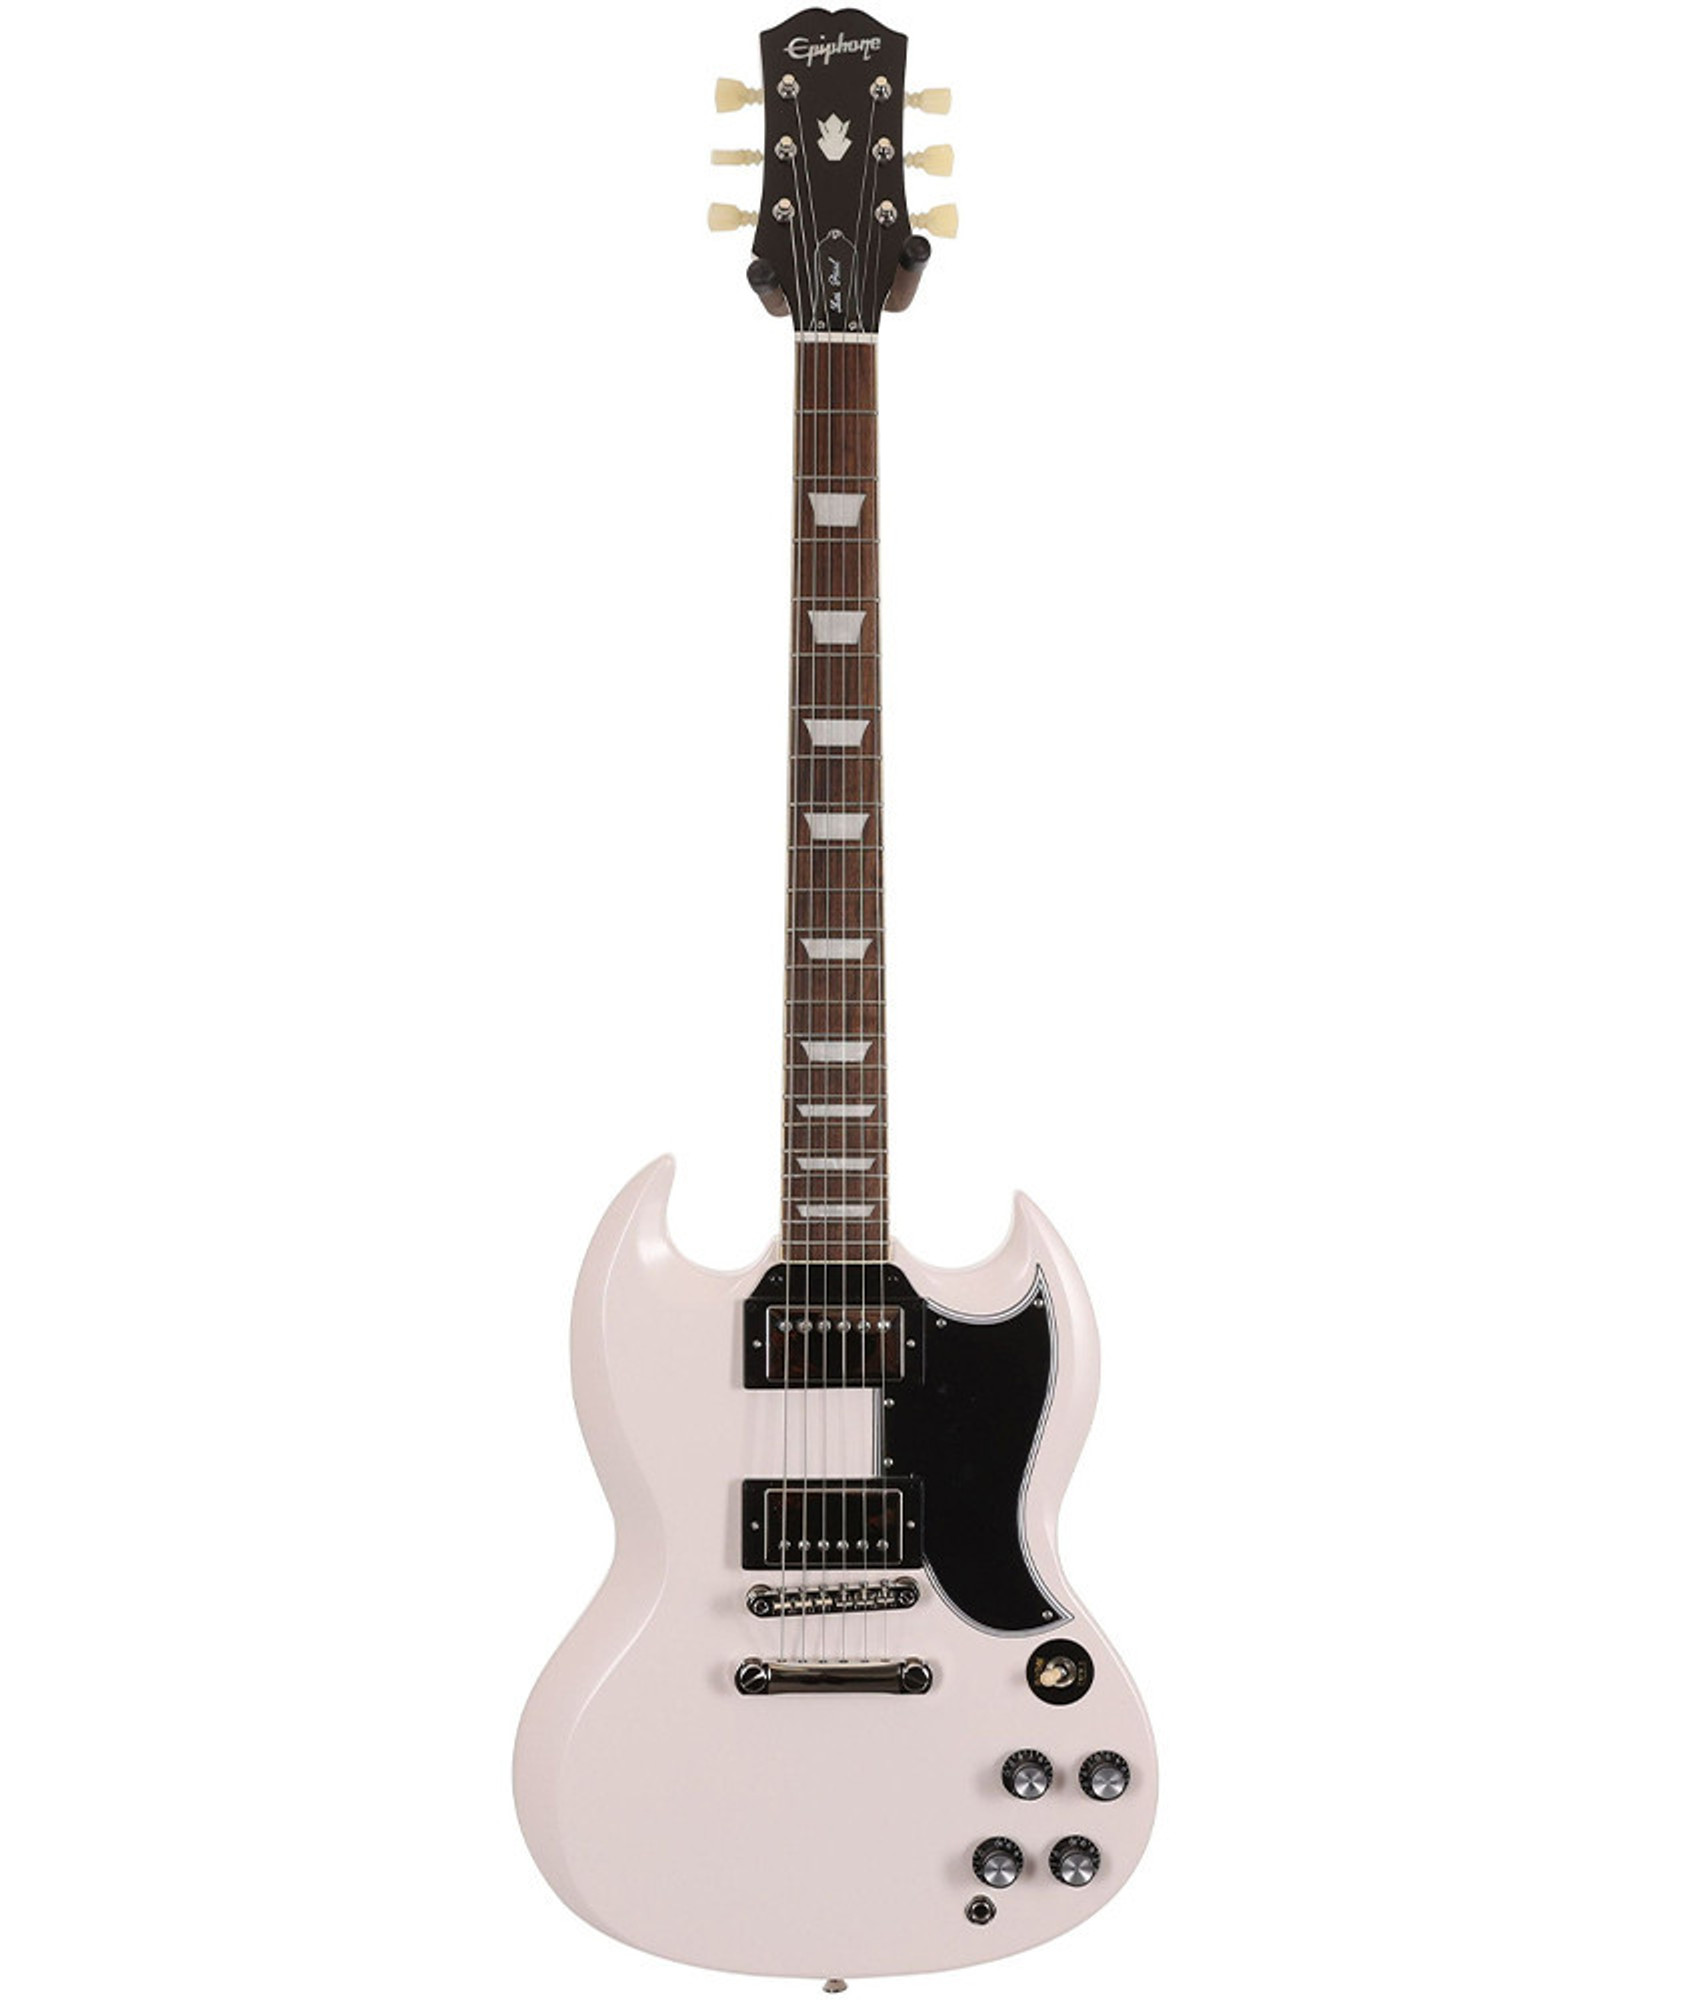 Epiphone 1961 Les Paul SG Standard Electric Guitar - Aged Classic